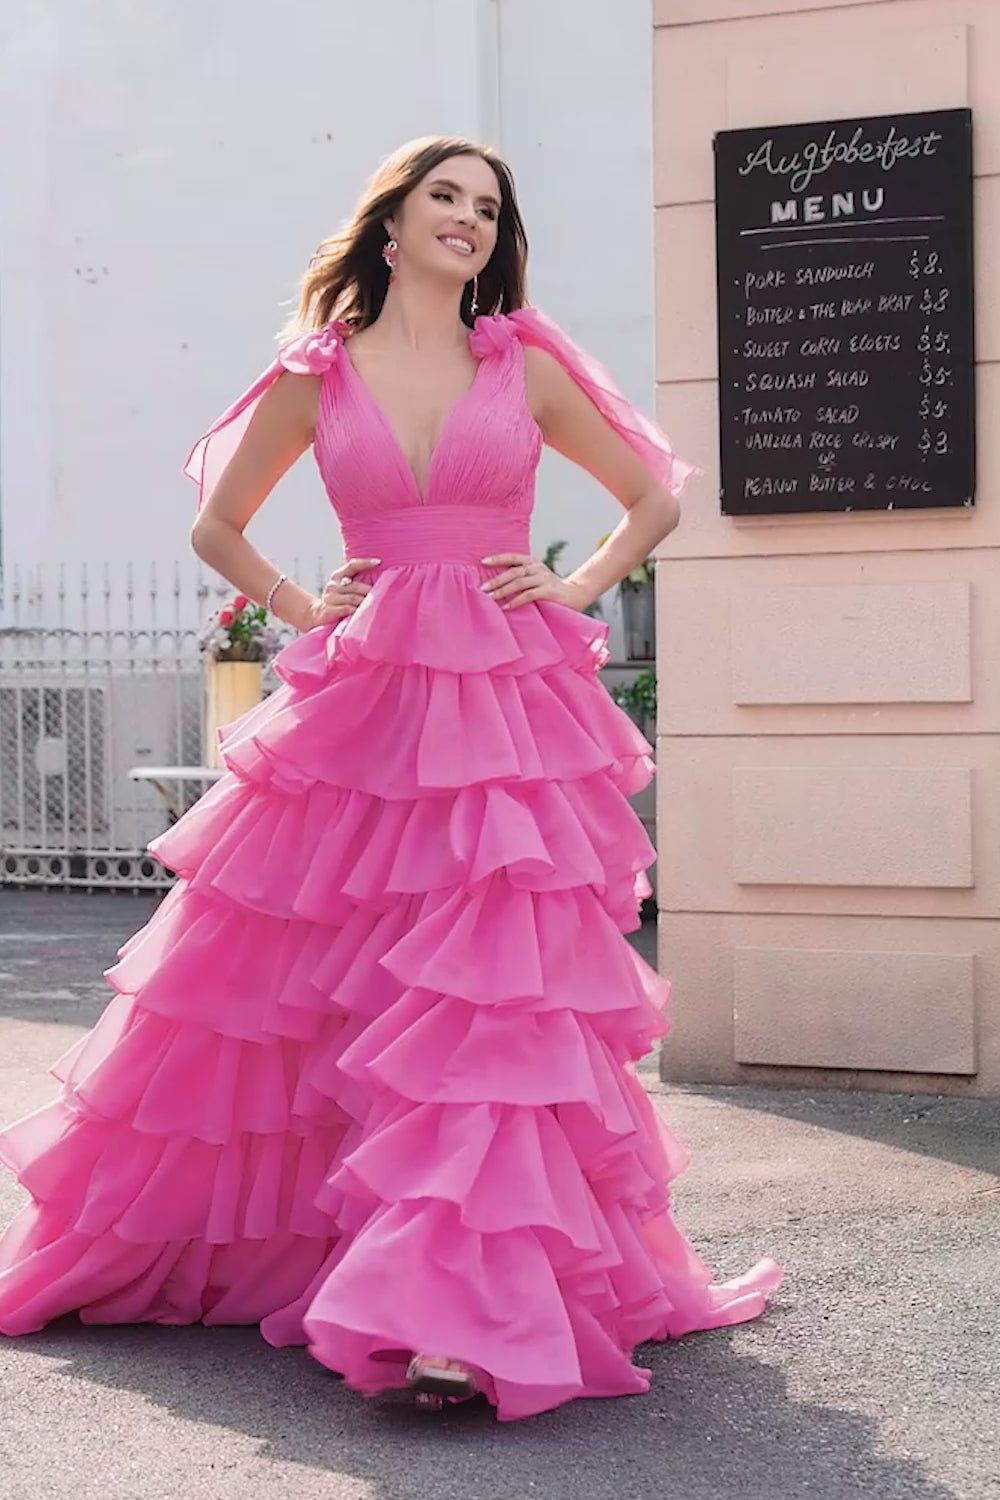 Princess A-Line V-Neck Fuchsia Prom Dress With Slit